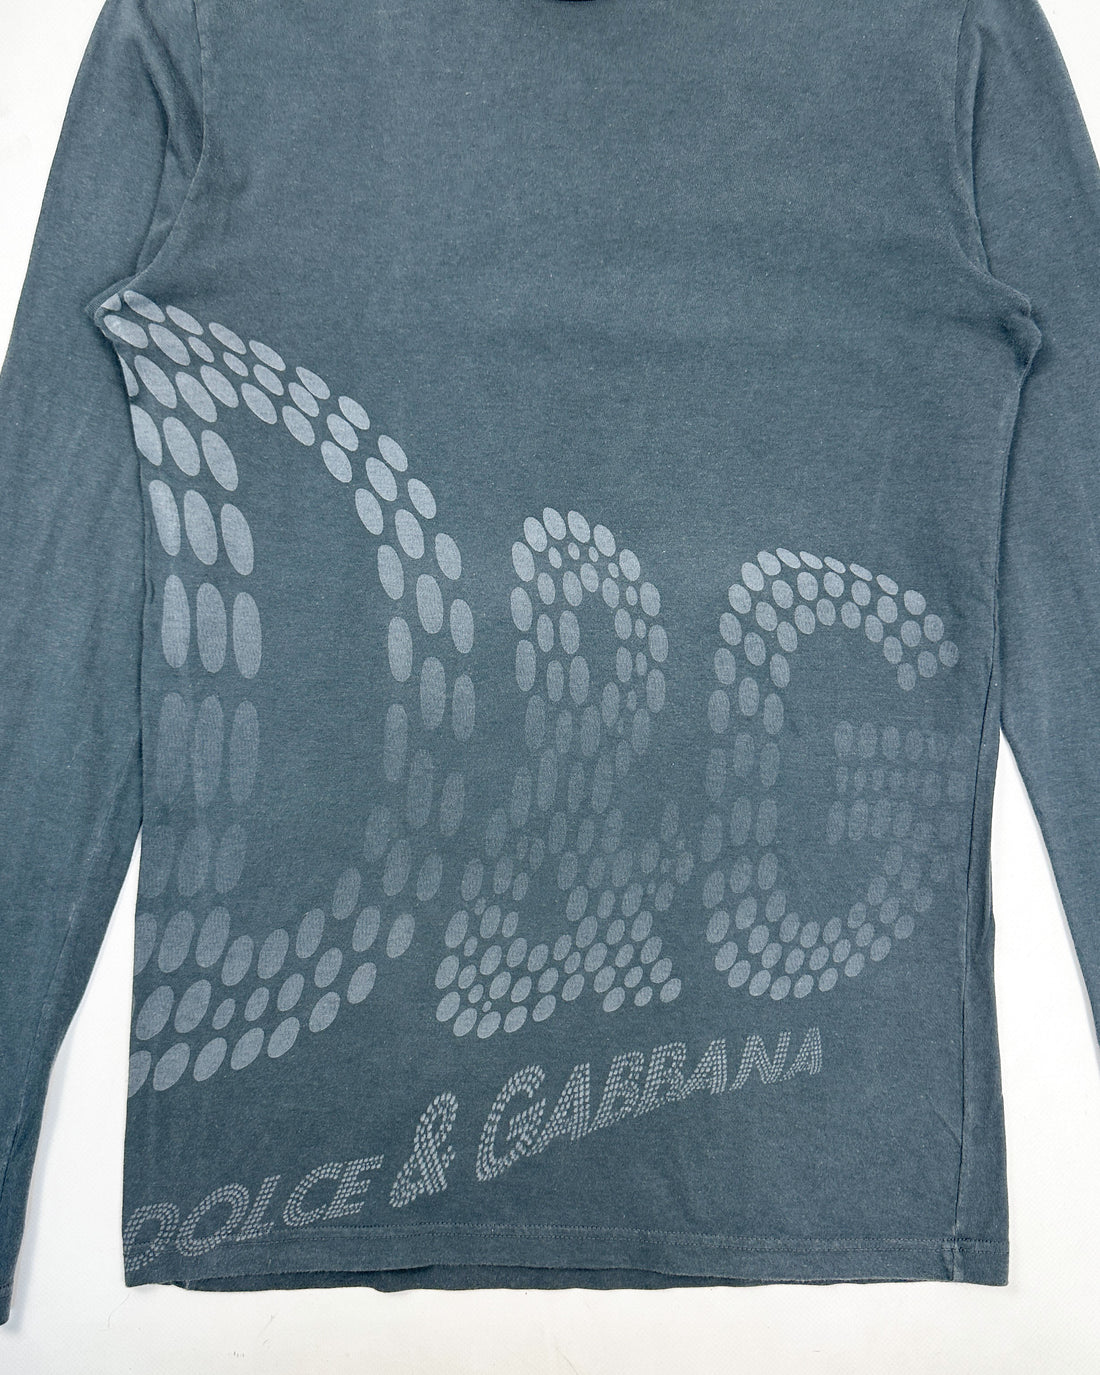 Dolce & Gabbana Dots Logo Long Sleeve Tee Top 2000's